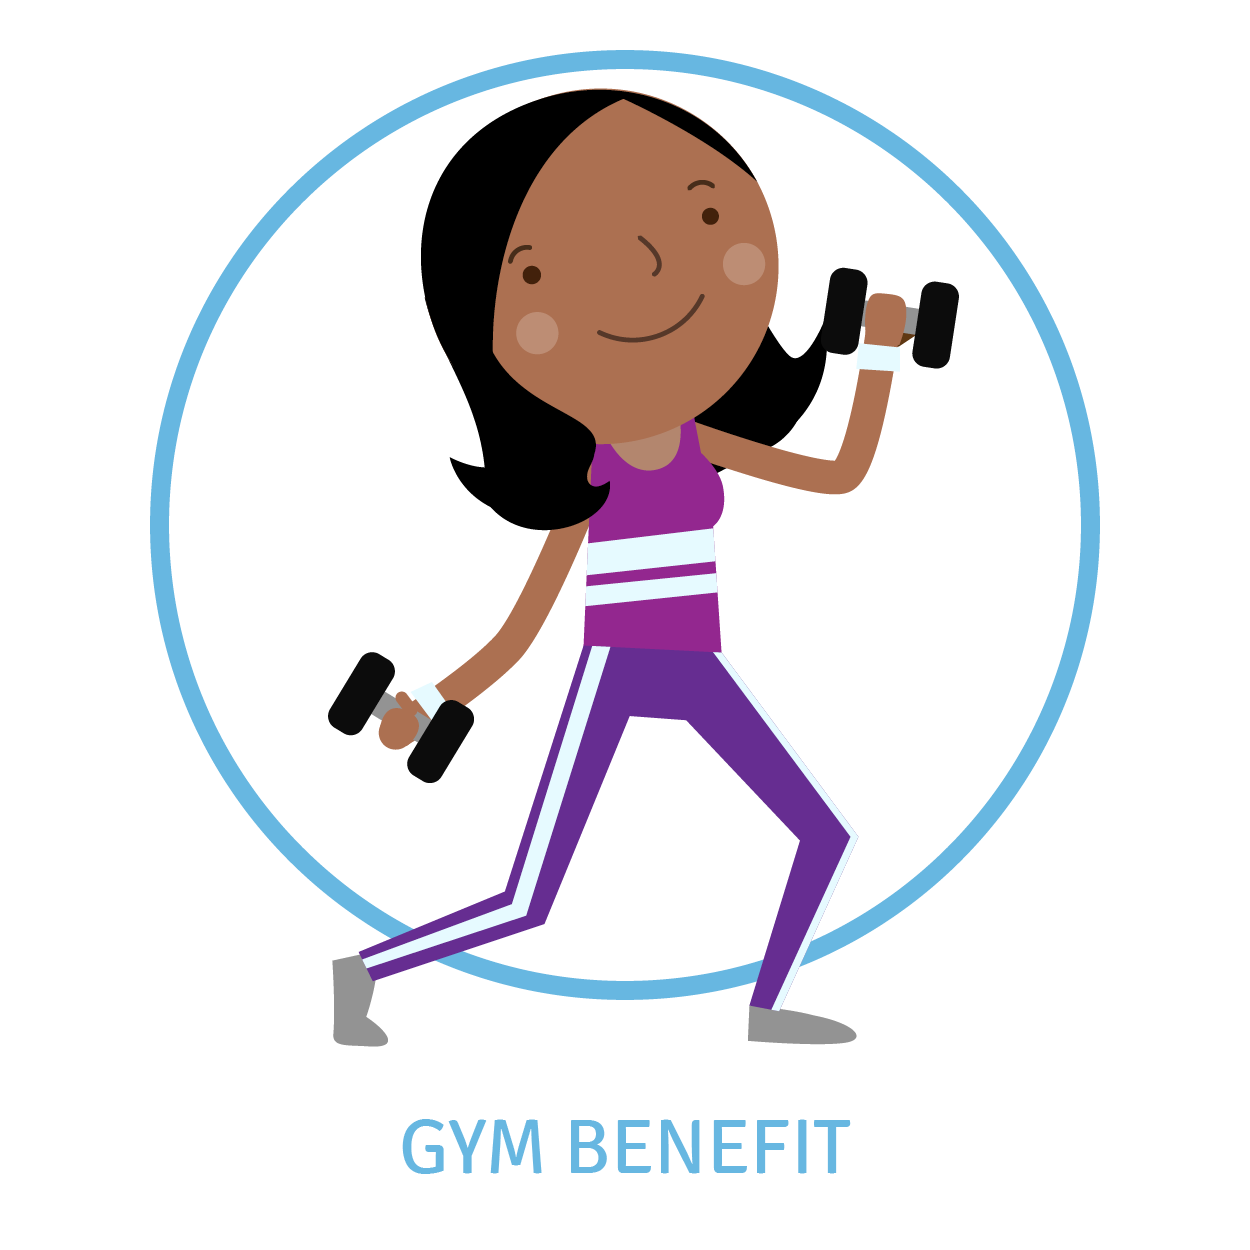 Gym Membership Benefit